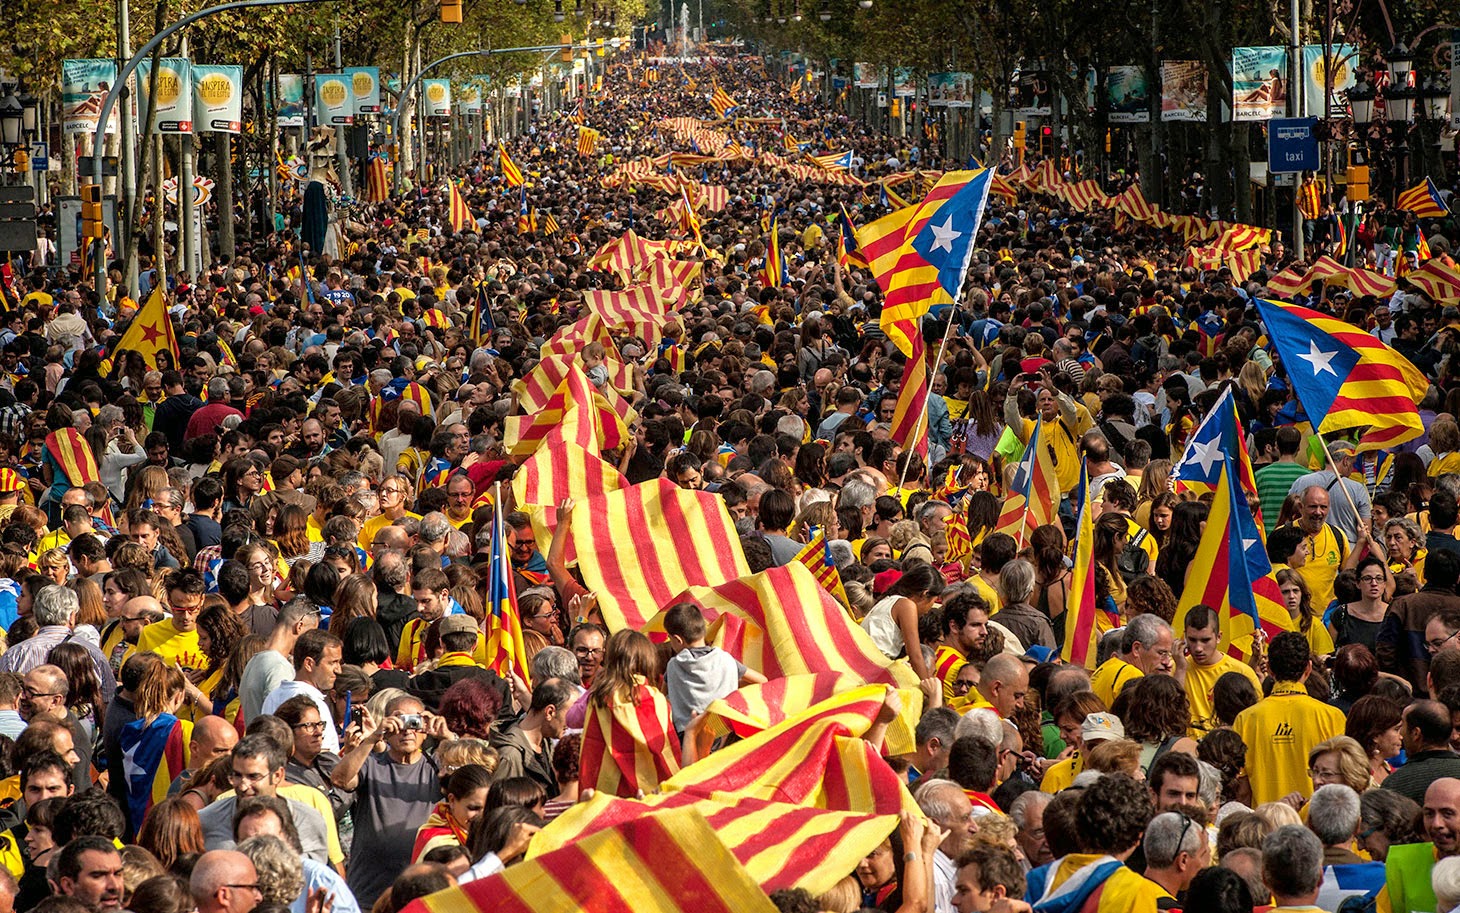 http://www.presstv.com/detail/2014/10/03/380934/catalonia-defies-spain-court-ruling/